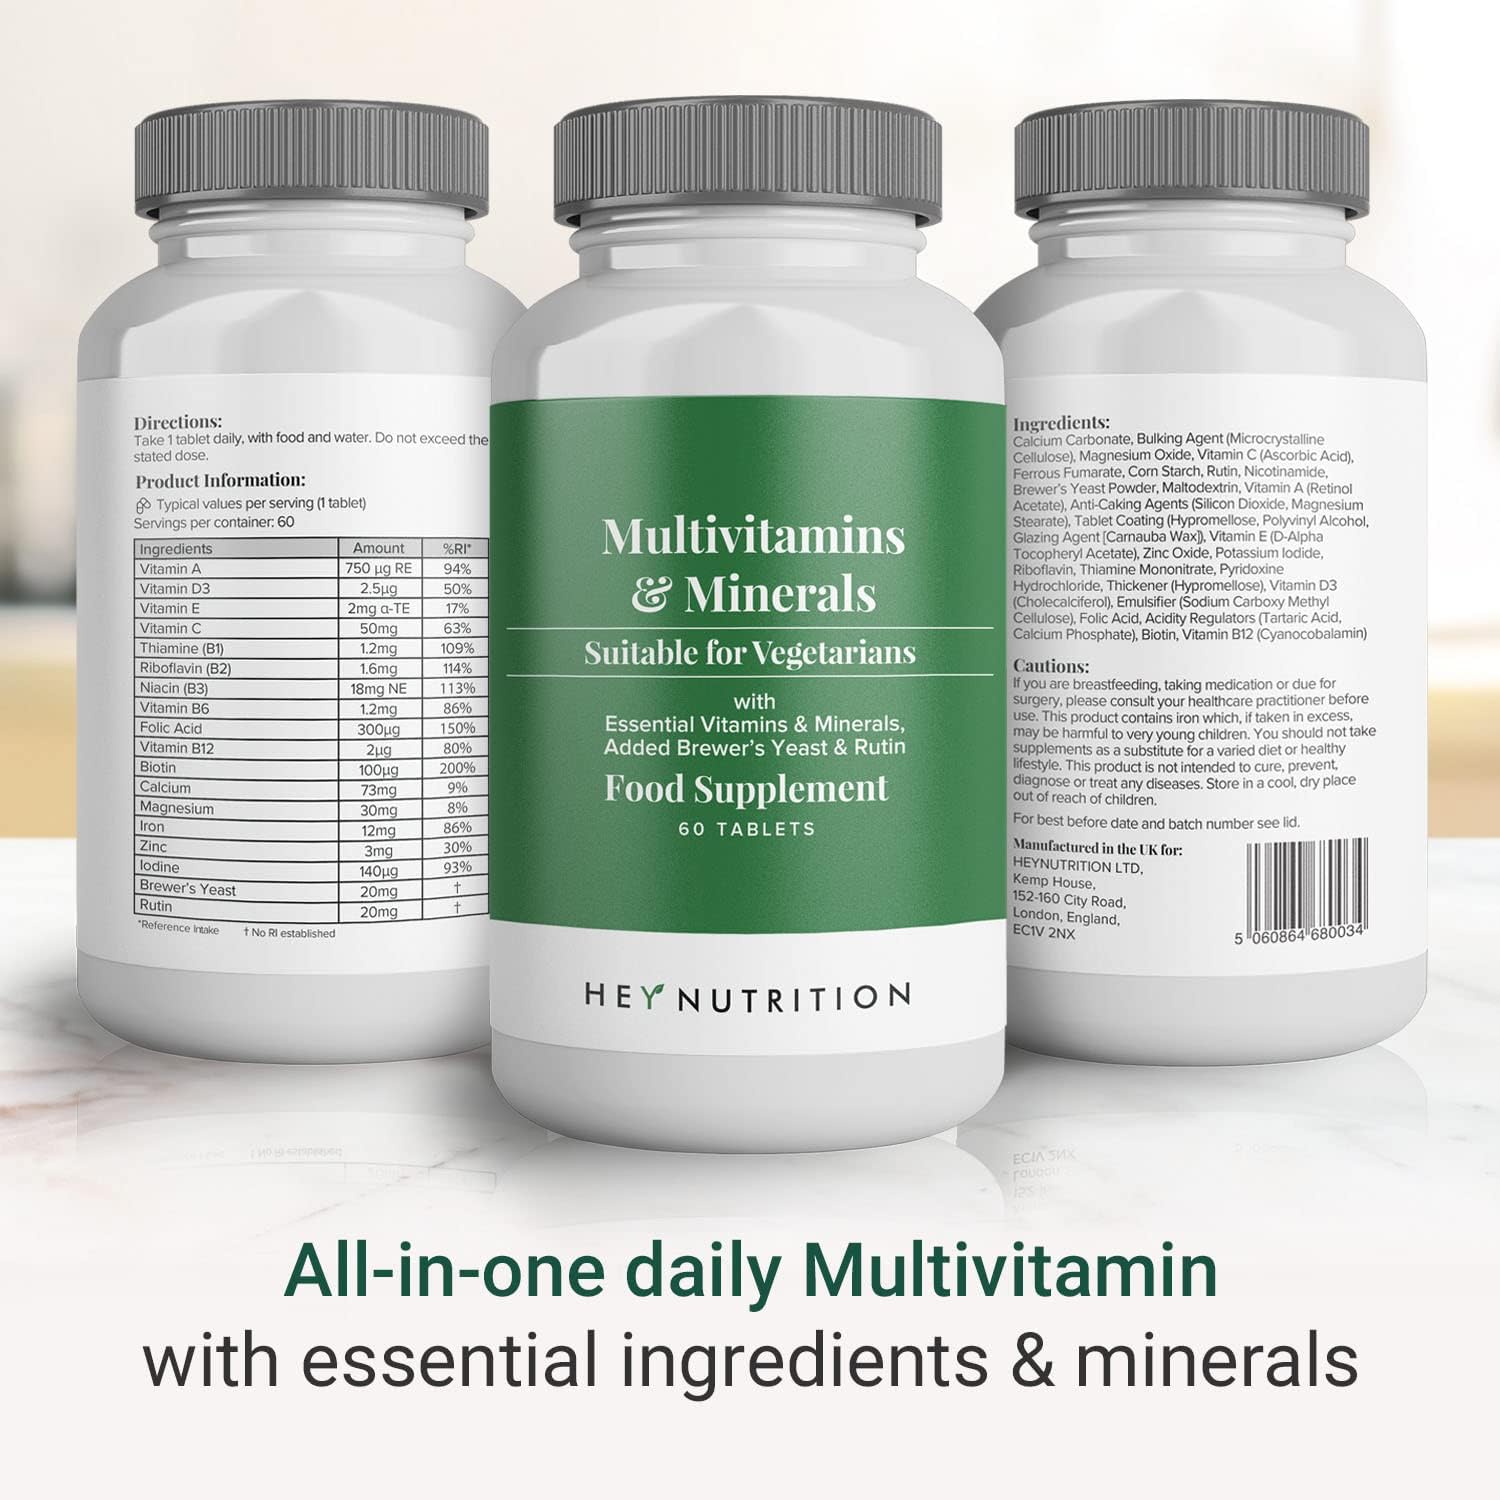 Hey Nutrition Multivitamins & Minerals